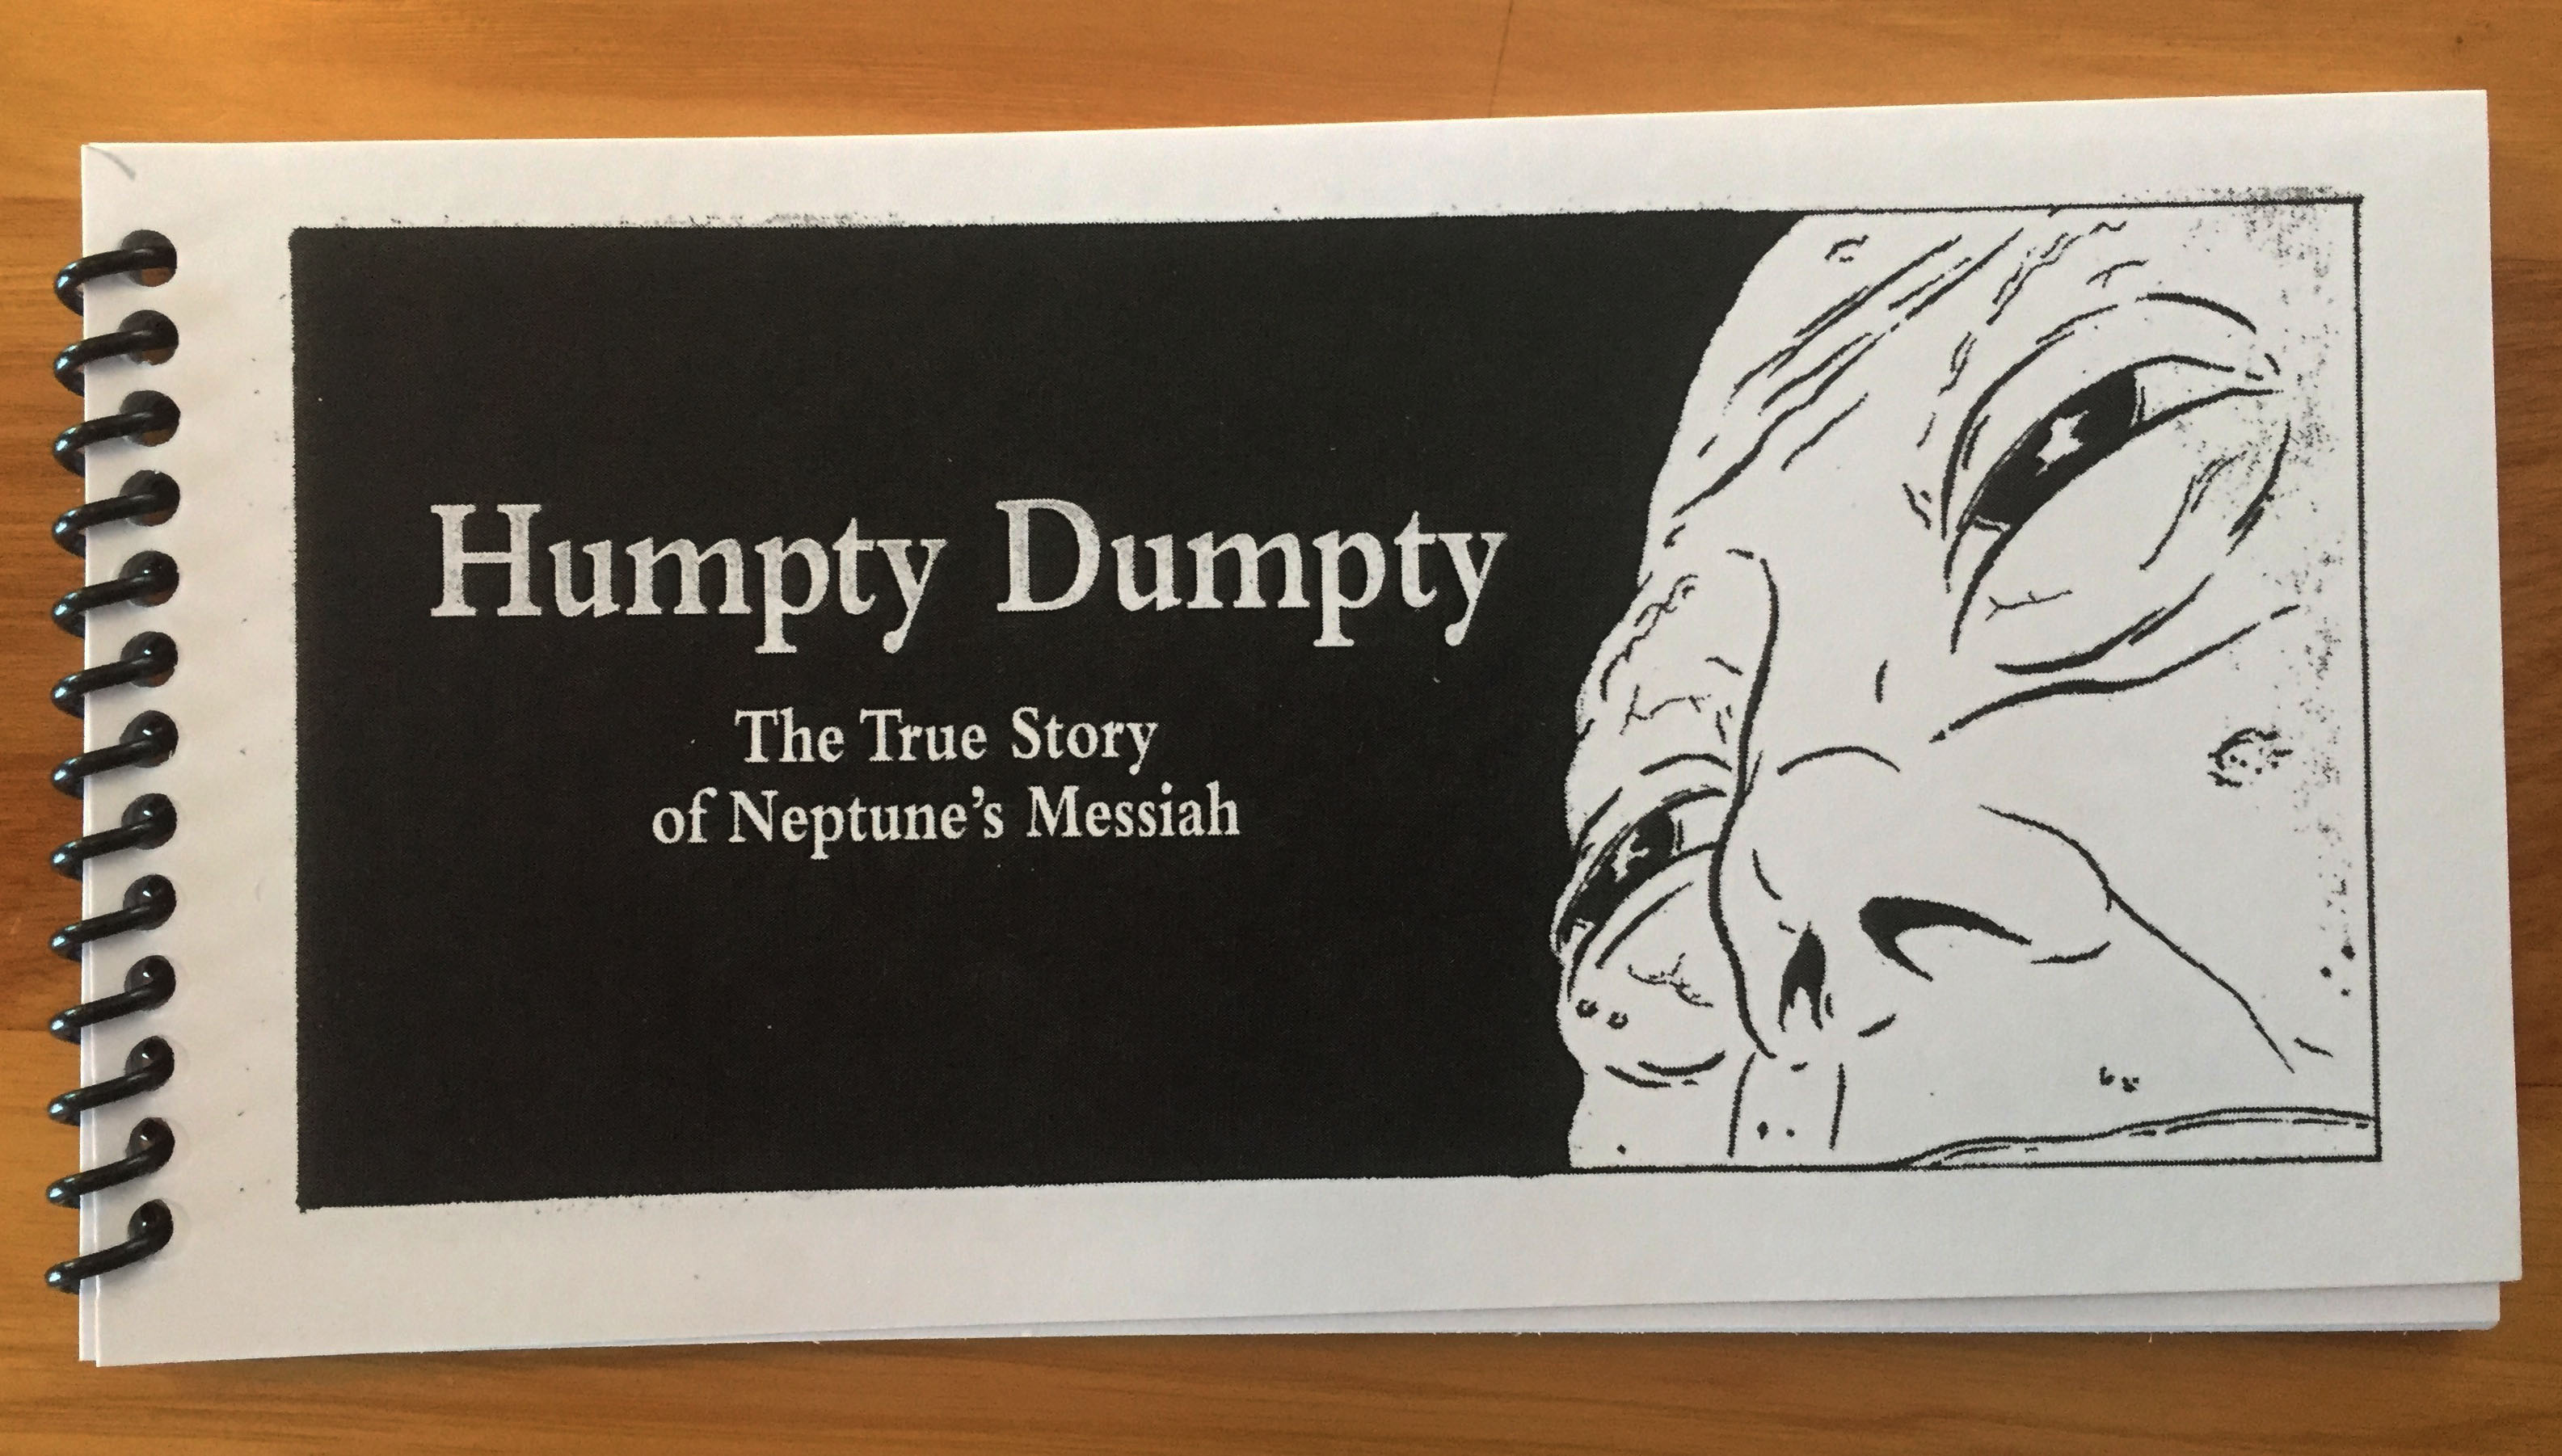 Humpty Dumpty - The True Story of Neptune's Messiah